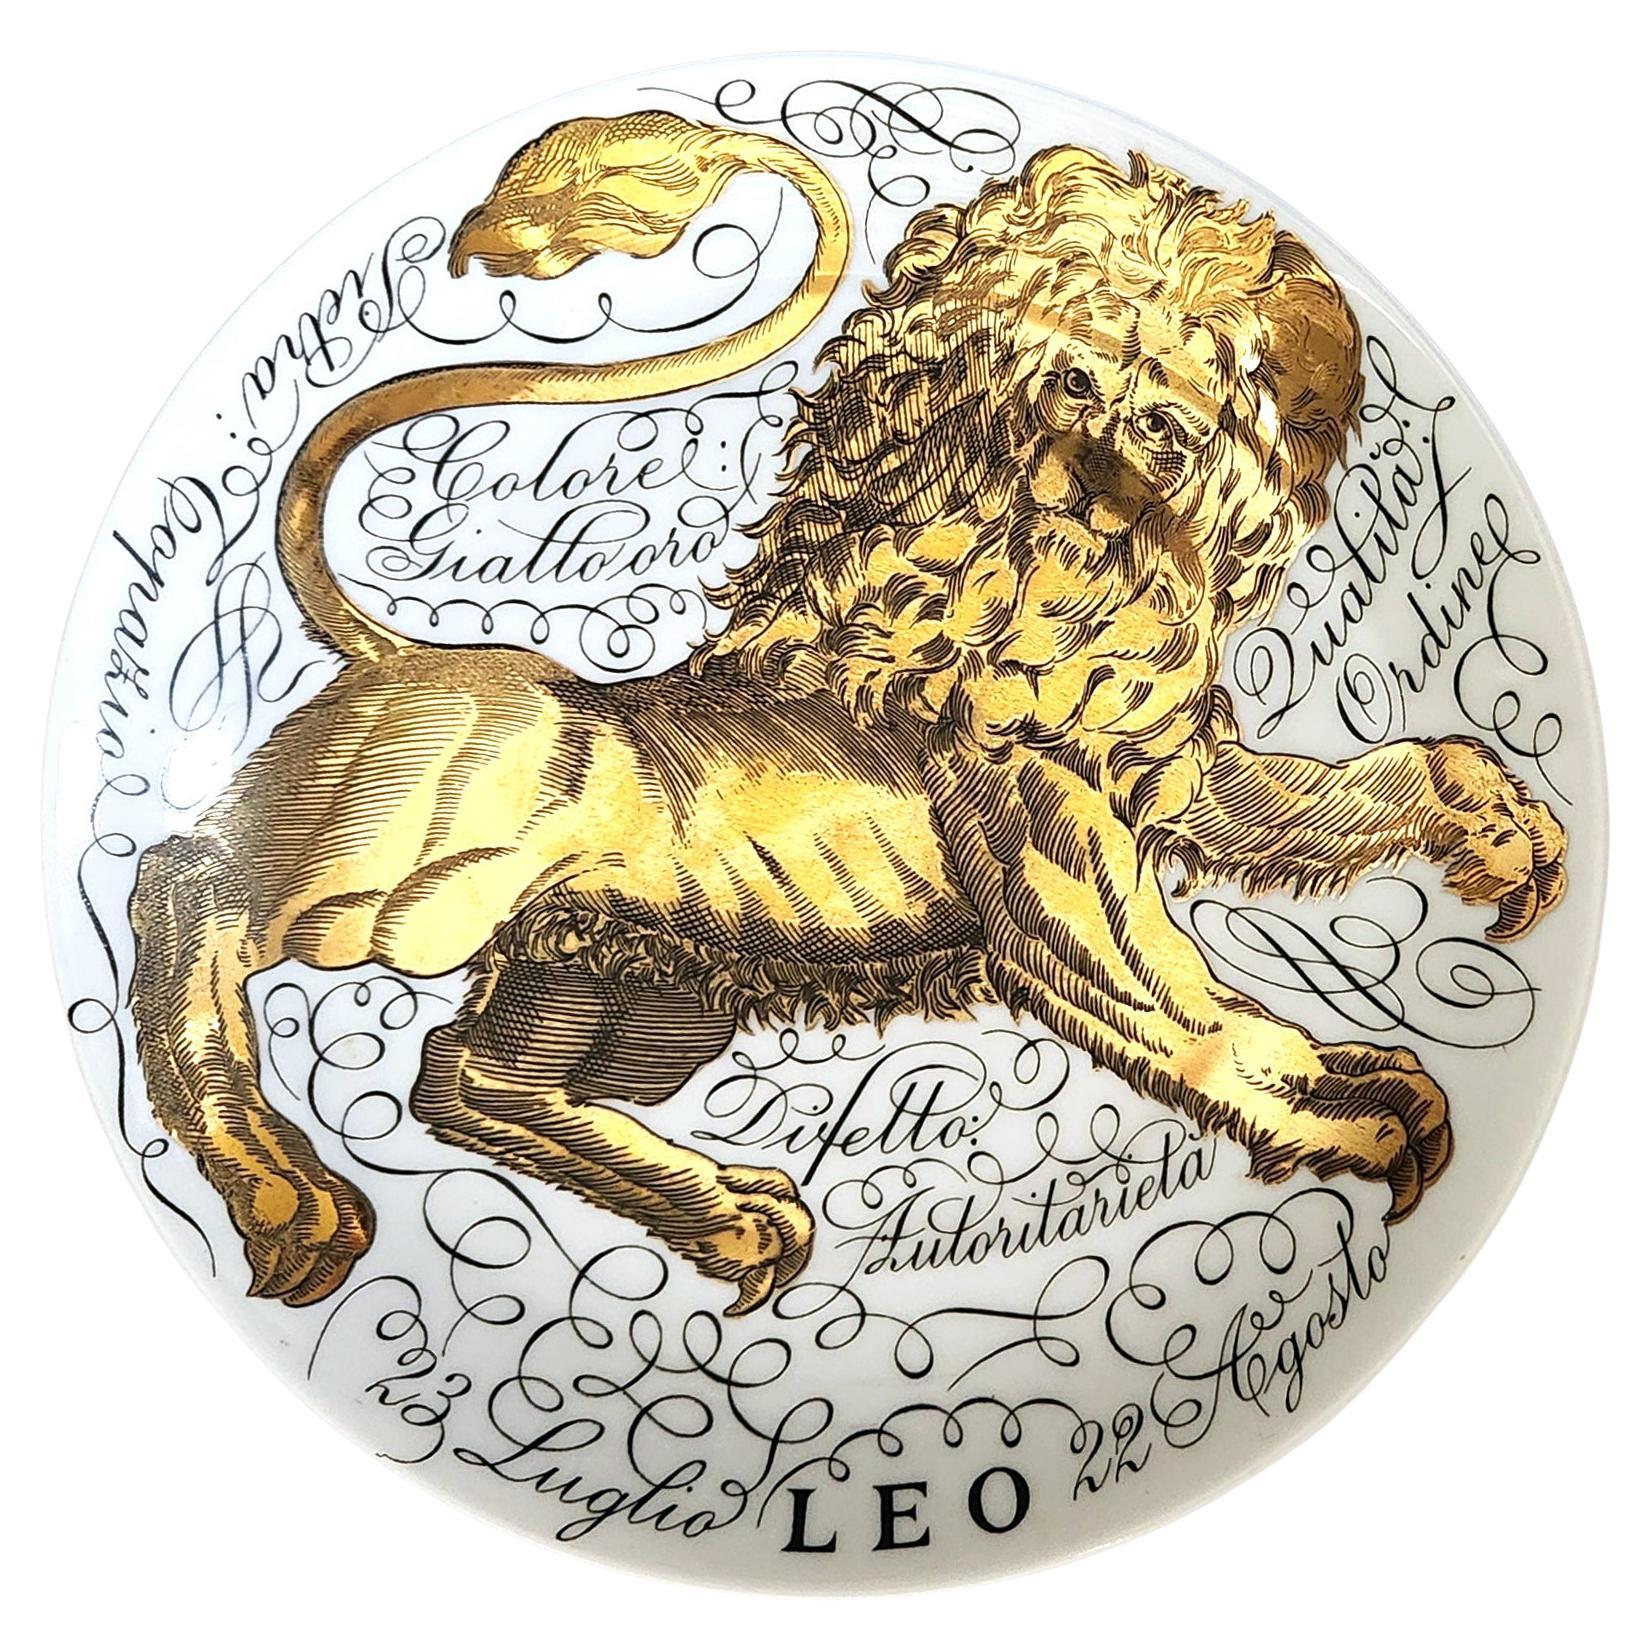 1965 Vintage Piero Fornasetti Porcelaine Zodiac Plate, Astrological Sign Leo